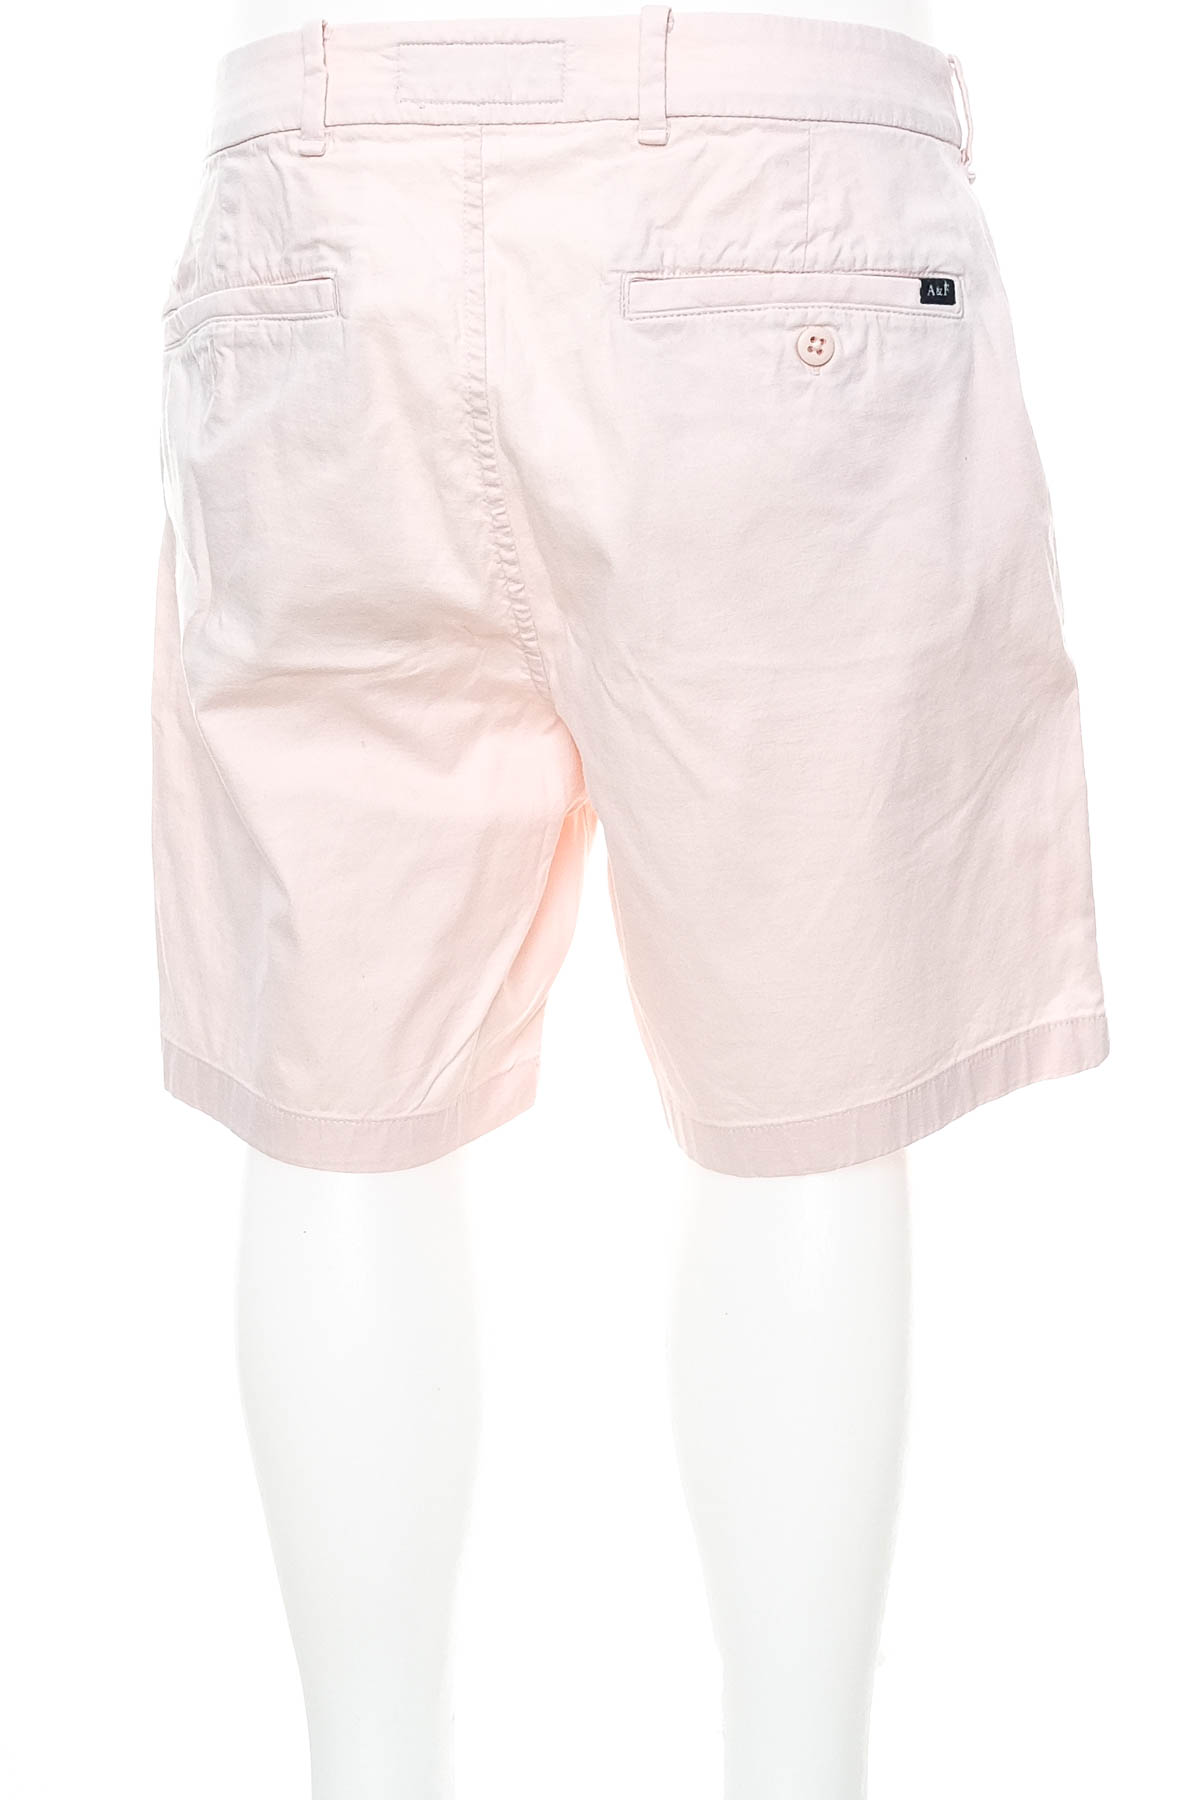 Men's shorts - Abercrombie & Fitch - 1